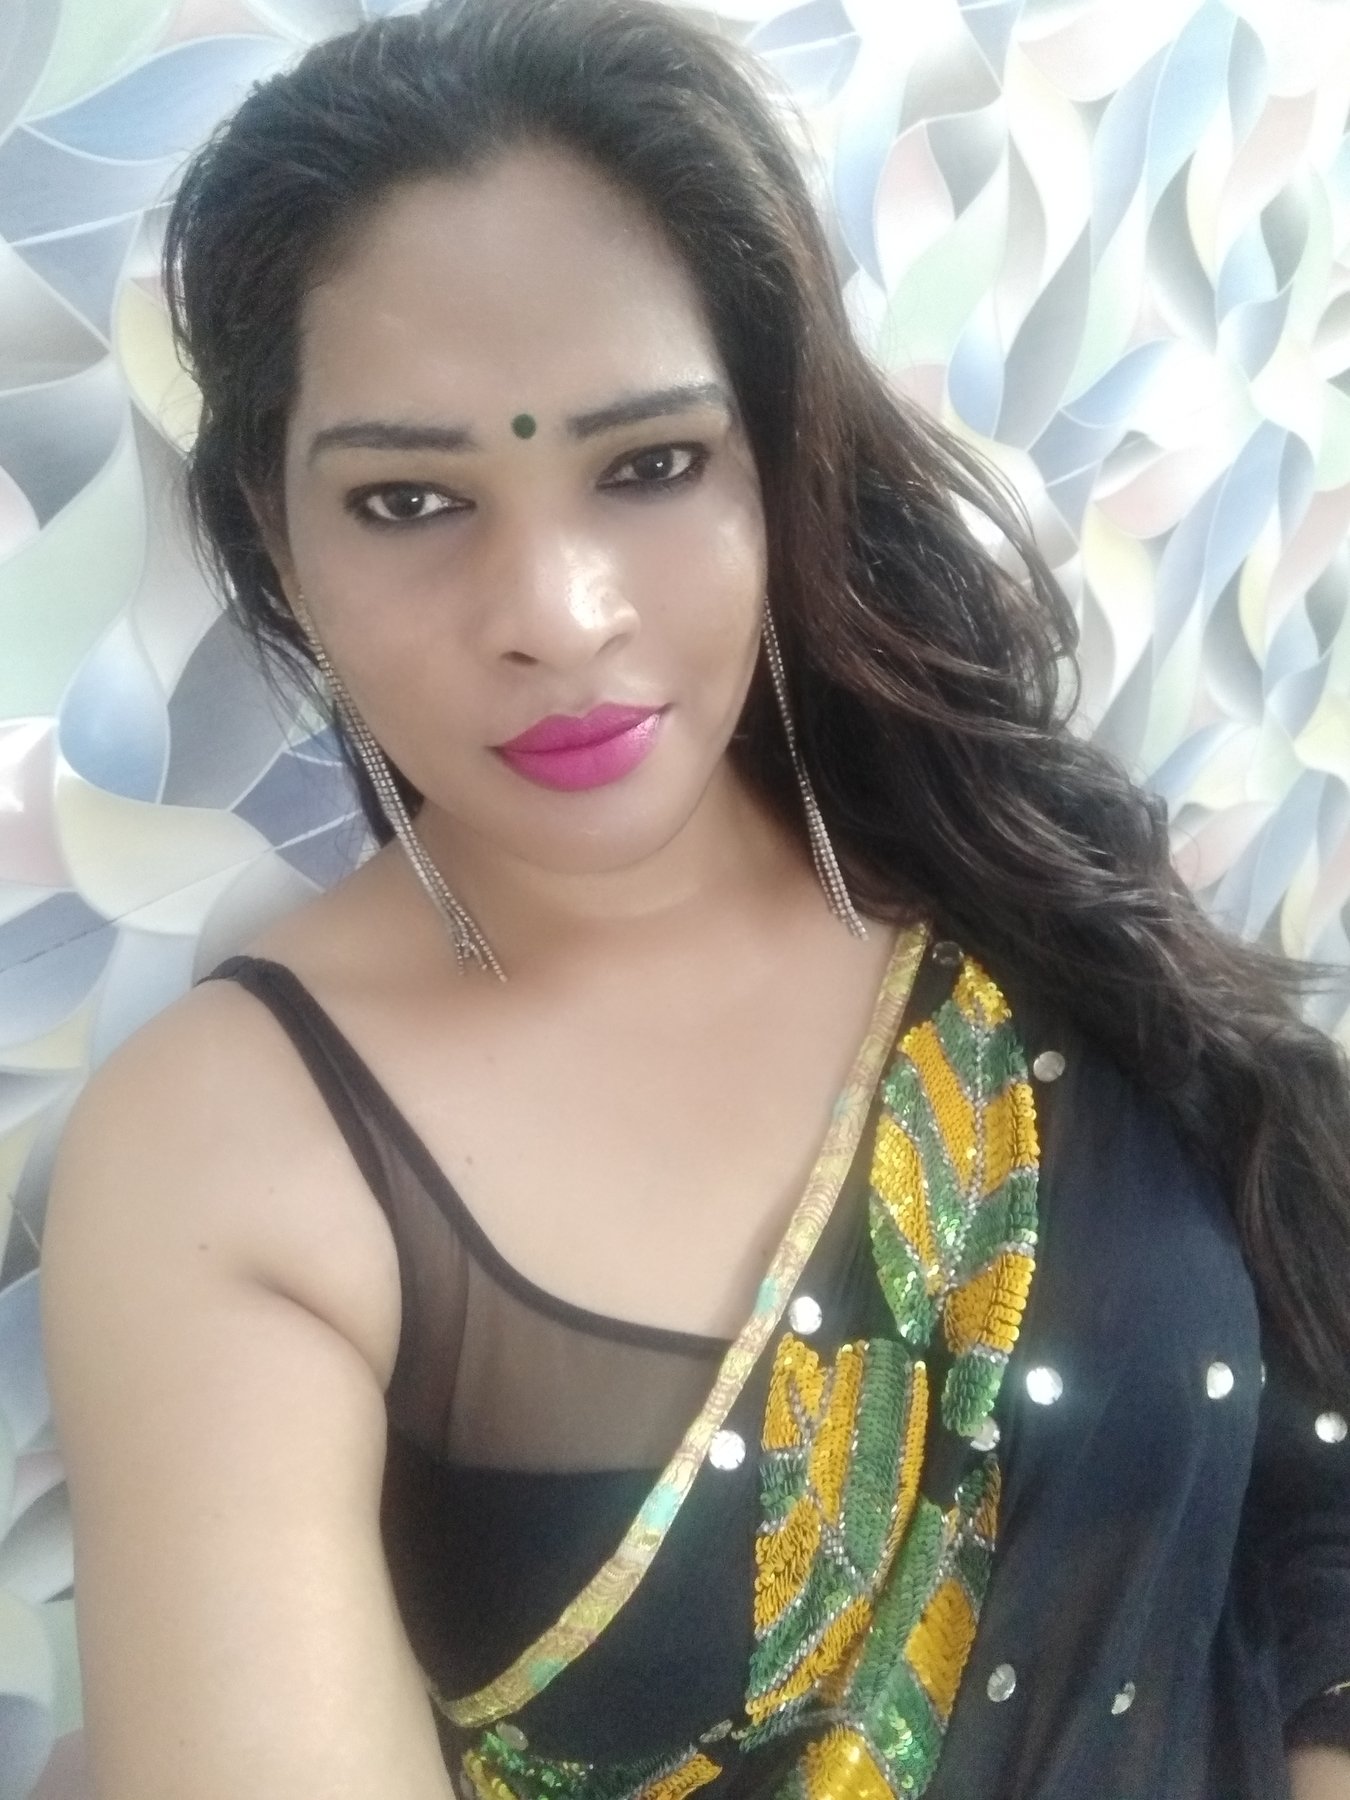 Indian Transsexuals Nude - Anjali Trans, Indian Transsexual escort in Mumbai